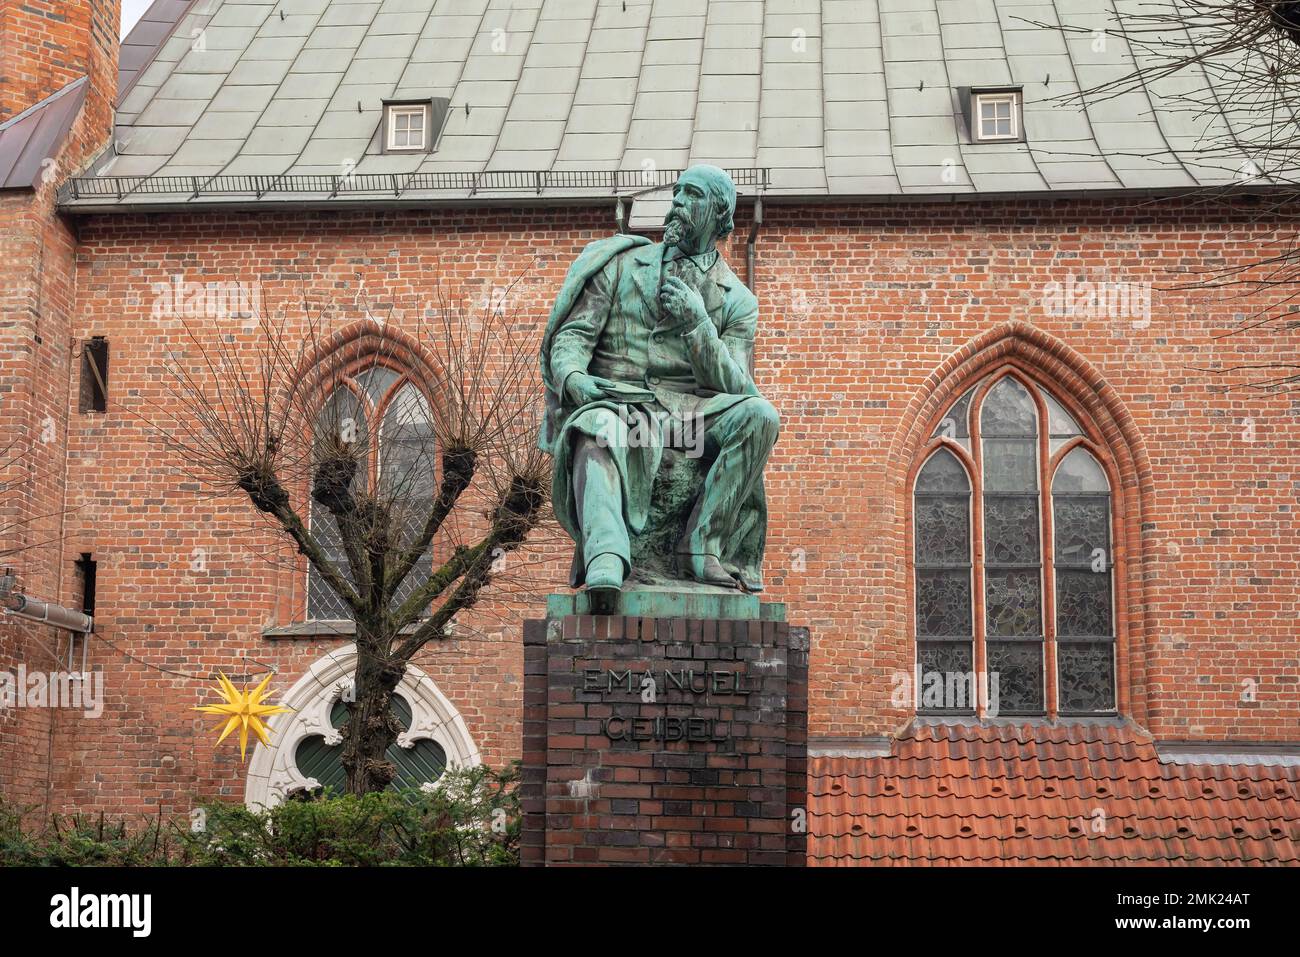 Emanuel Geibel Statue - Lubeck, Germany Stock Photo